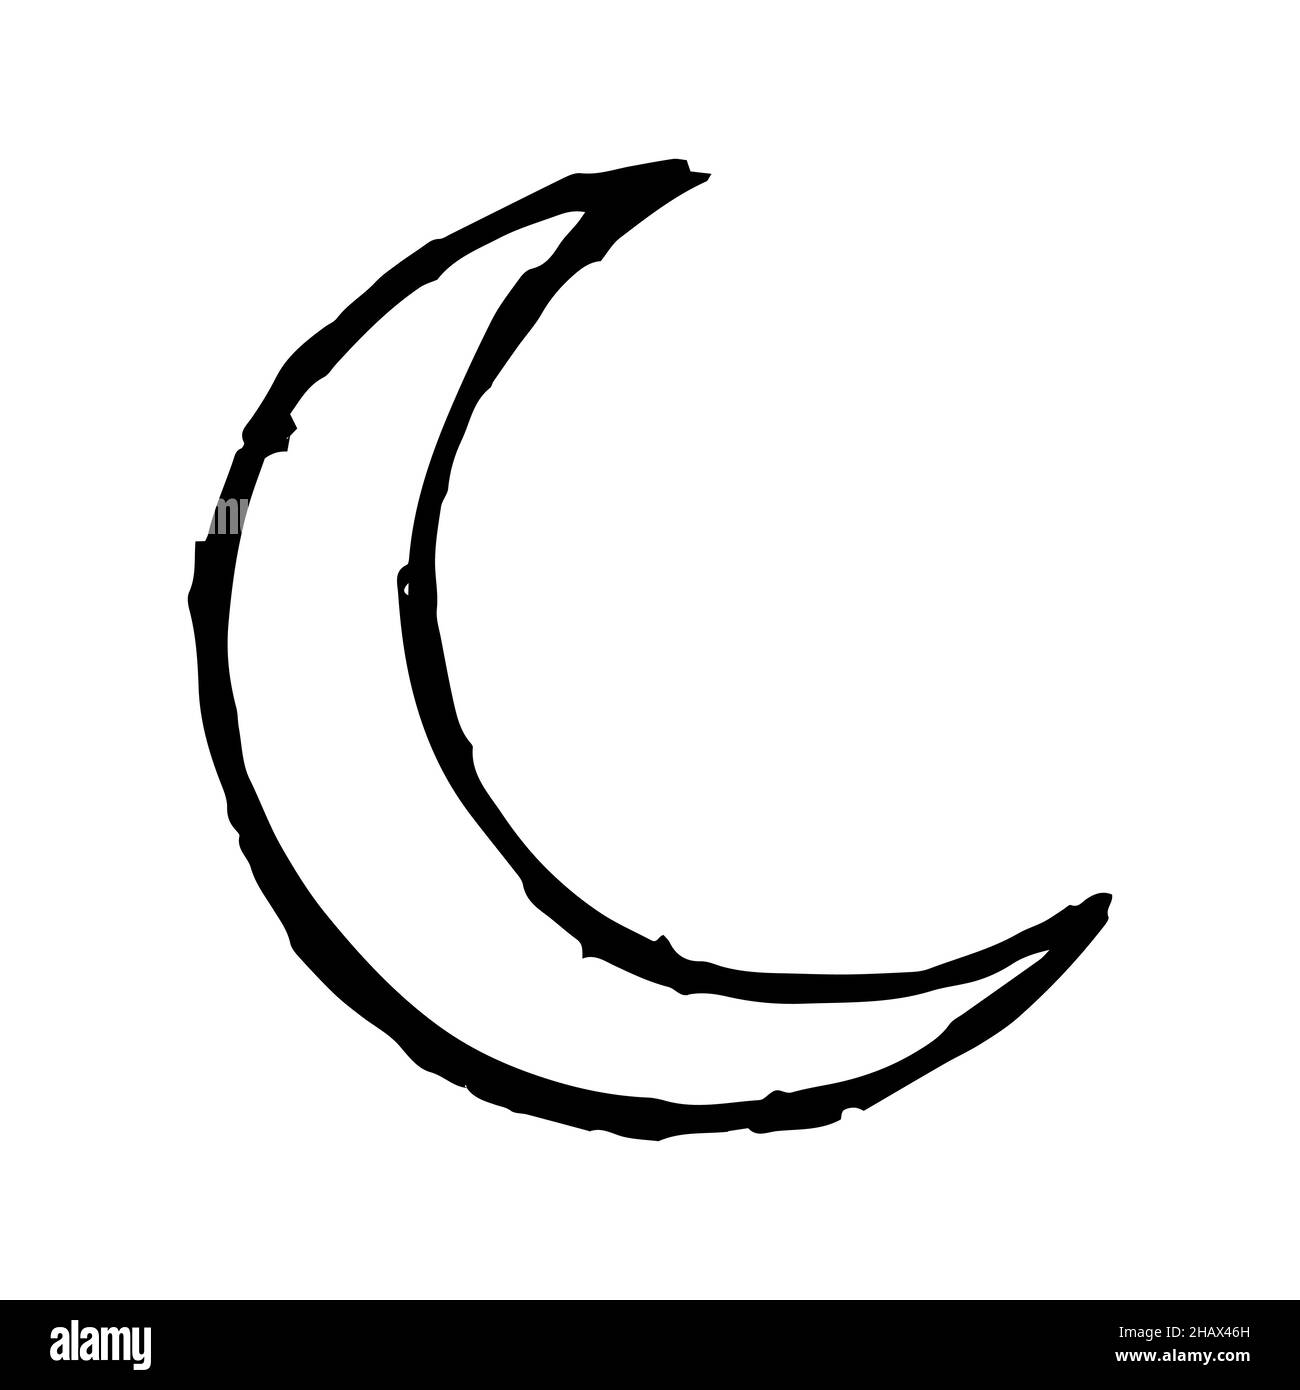 How to draw half moon  Simple Method   YouTube